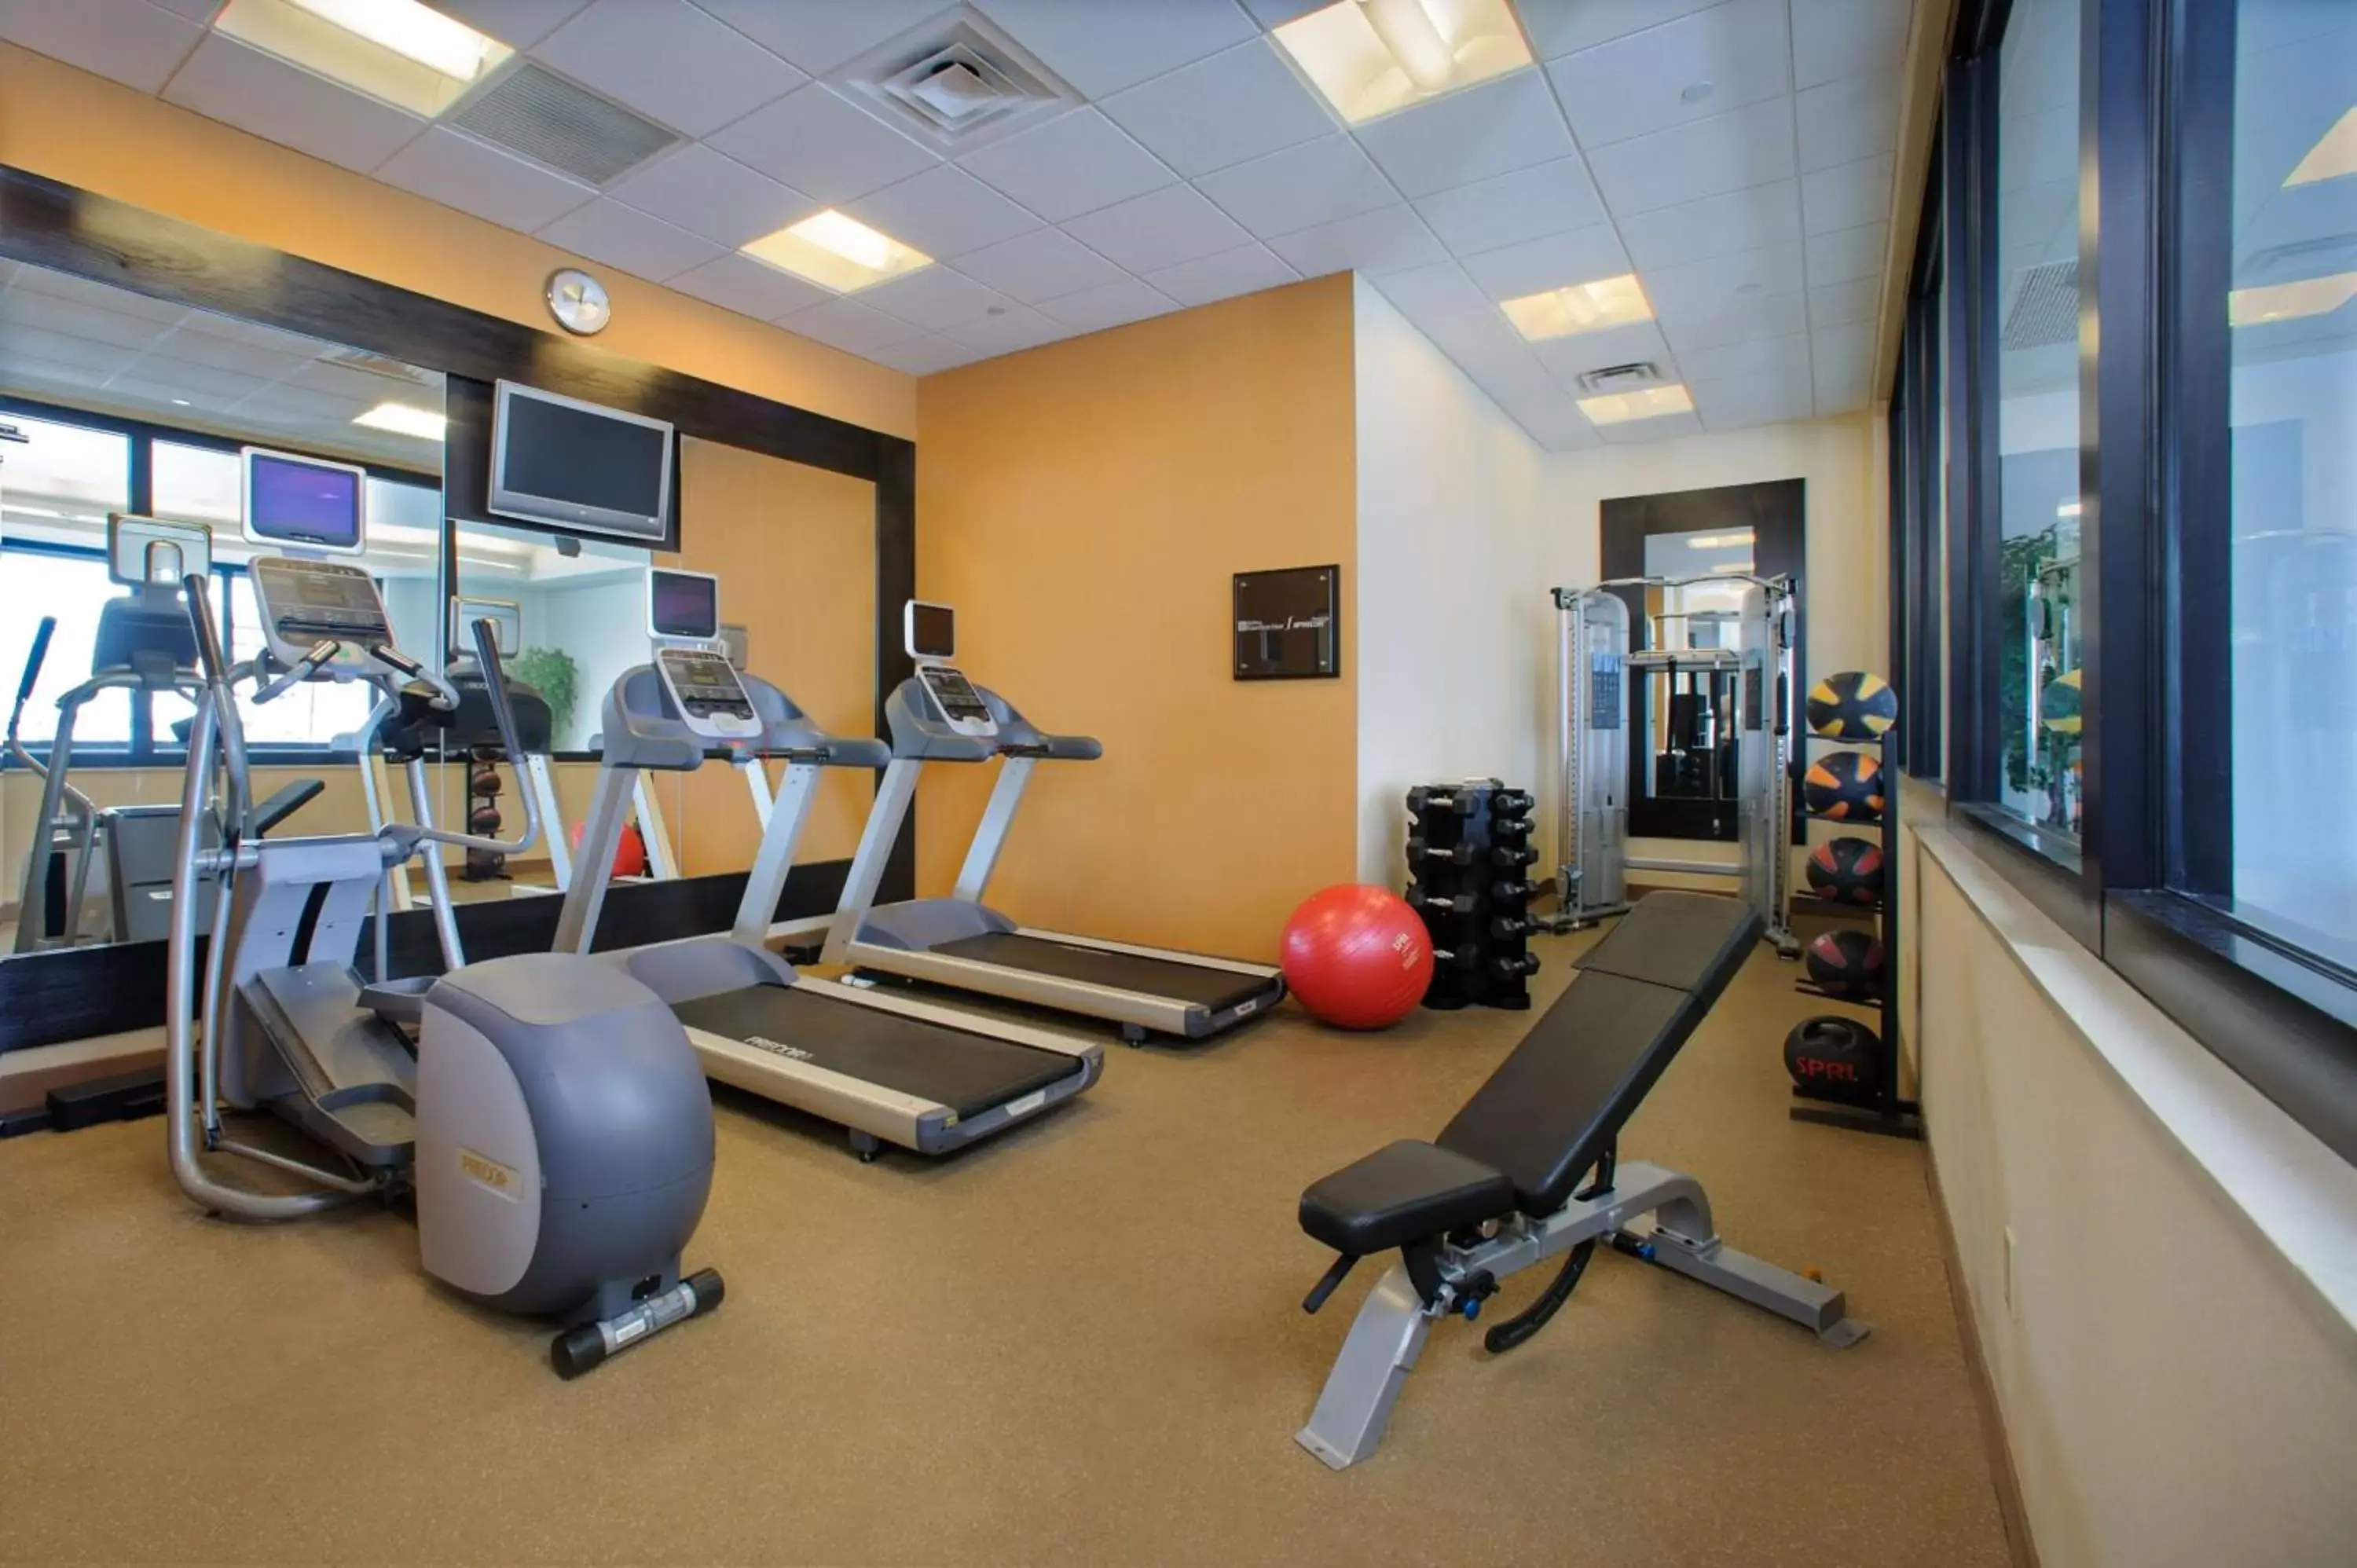 Fitness centre/facilities, Fitness Center/Facilities in Hilton Garden Inn Portland Downtown Waterfront